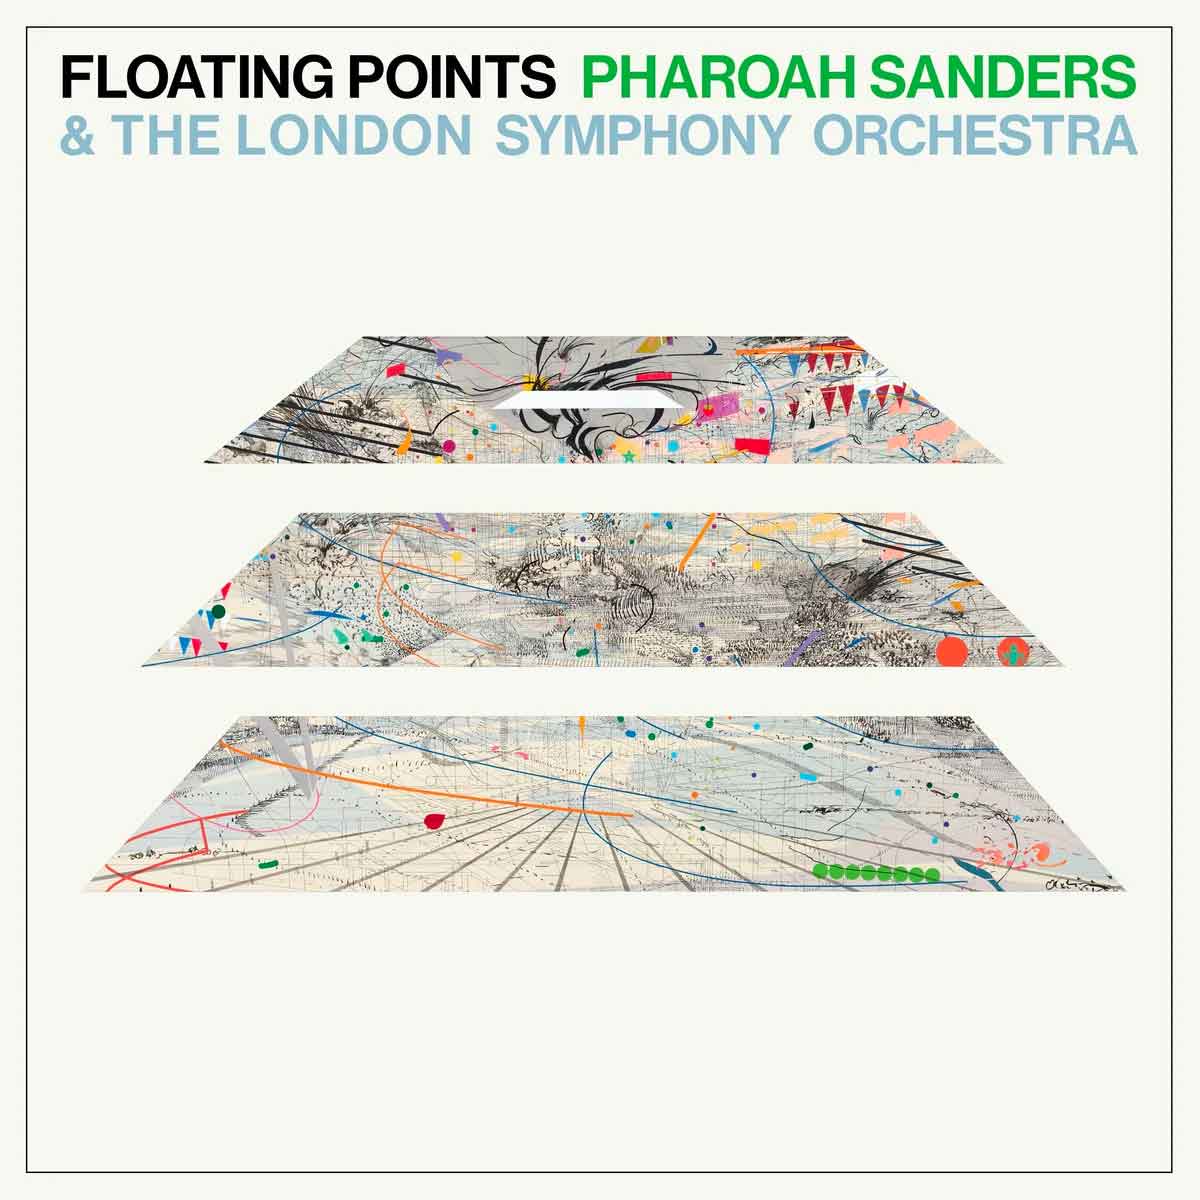 Tapa de Promises, disco de Floating Points, Pharoah Sanders & The London Symphony Orchestra